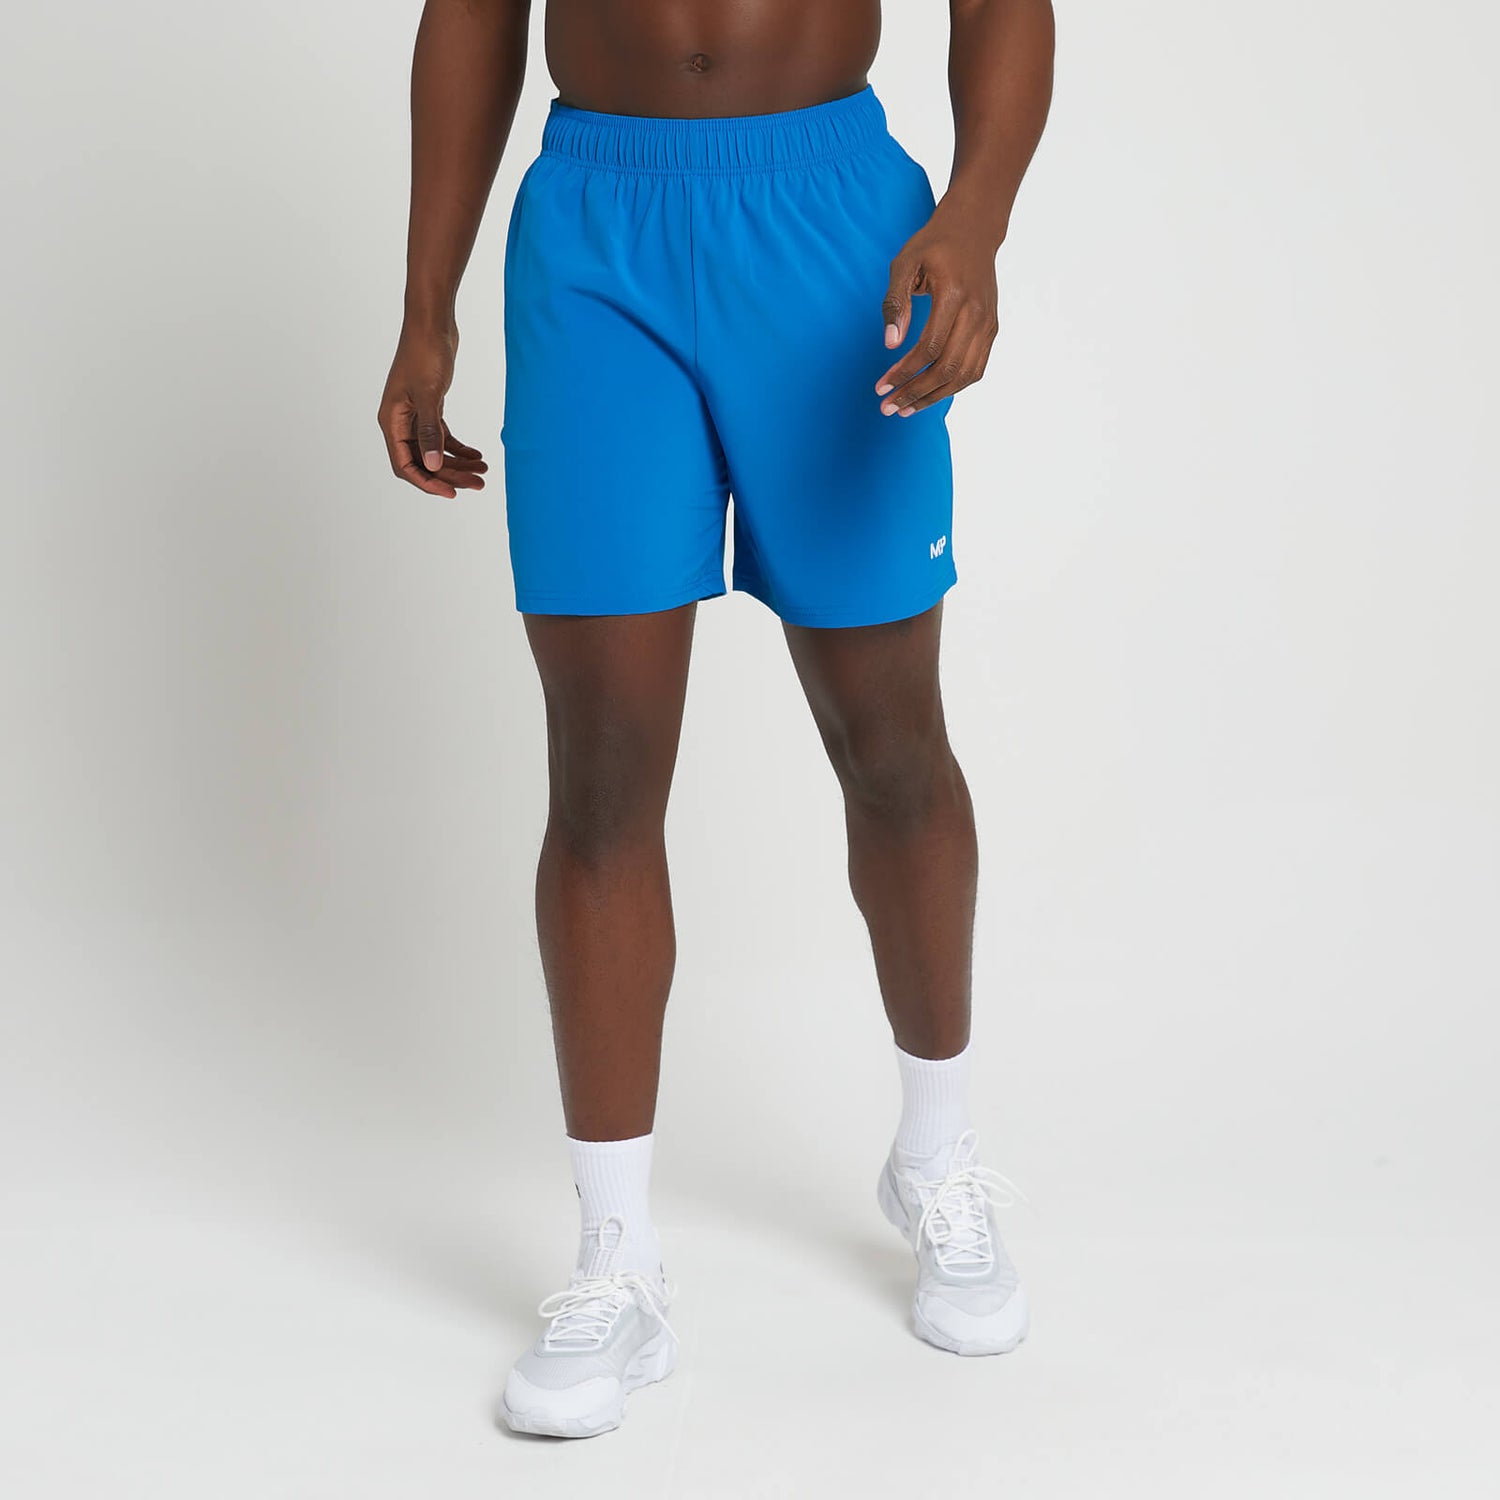 MP Men's Woven Training Shorts - True Blue - XS